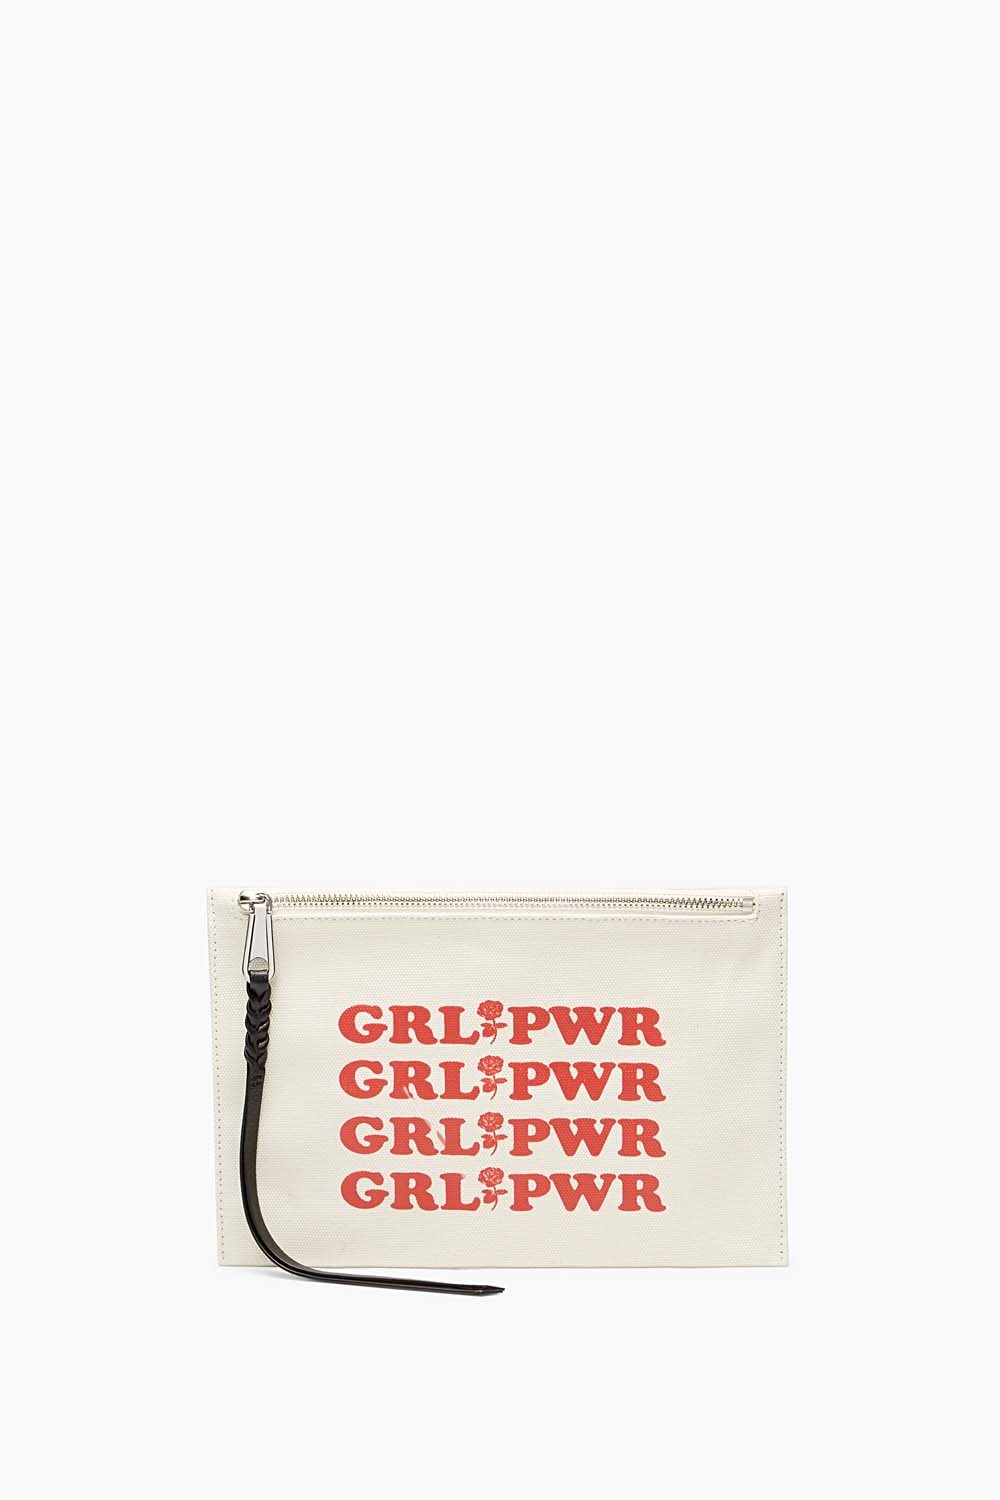 Medium Zip Pouch - GRL PWR